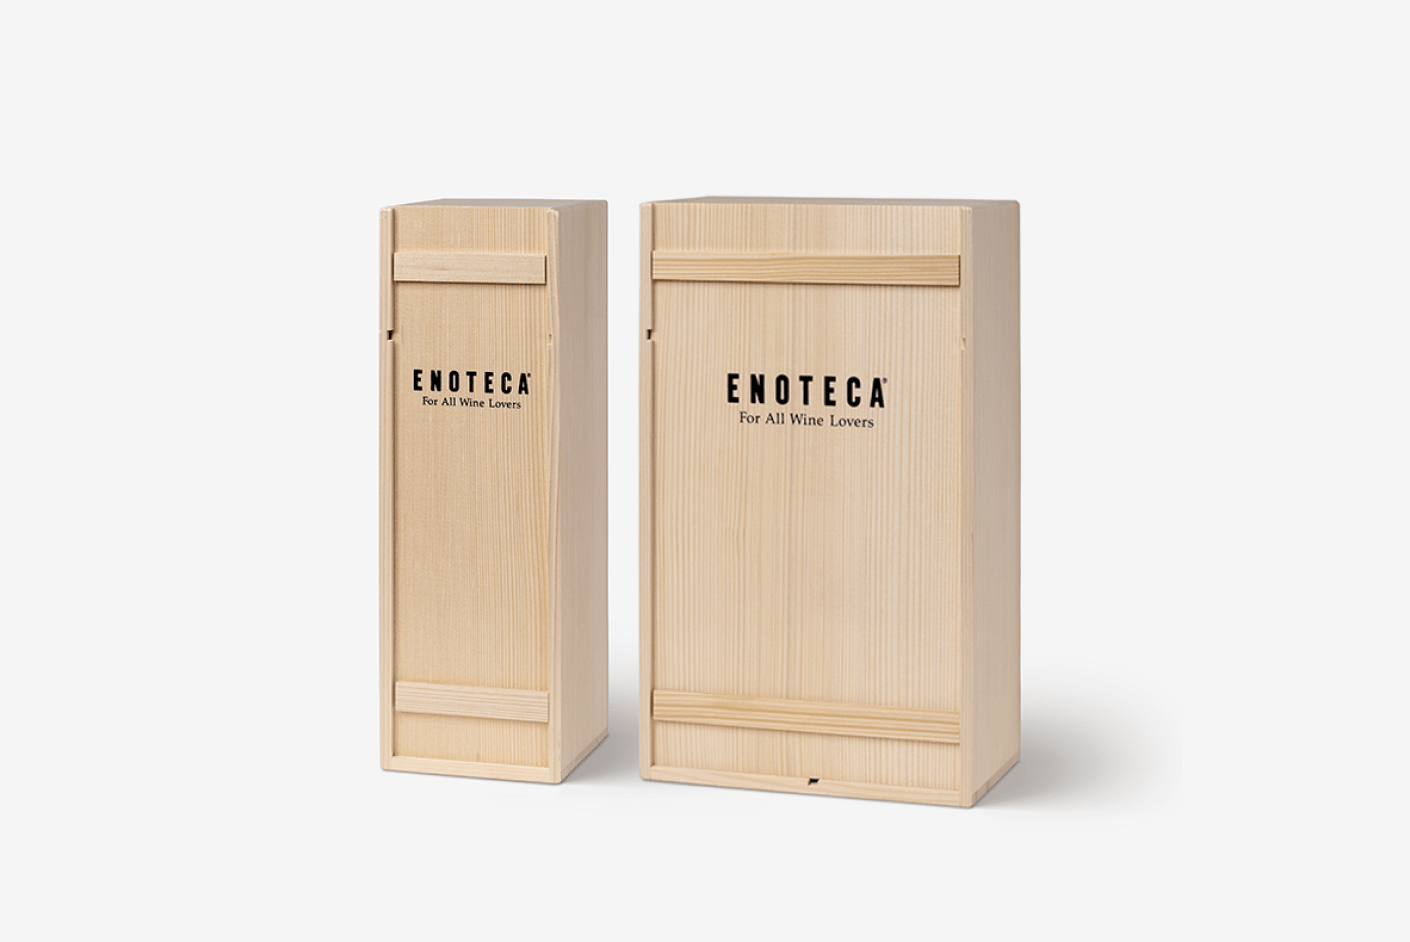 wooden-box